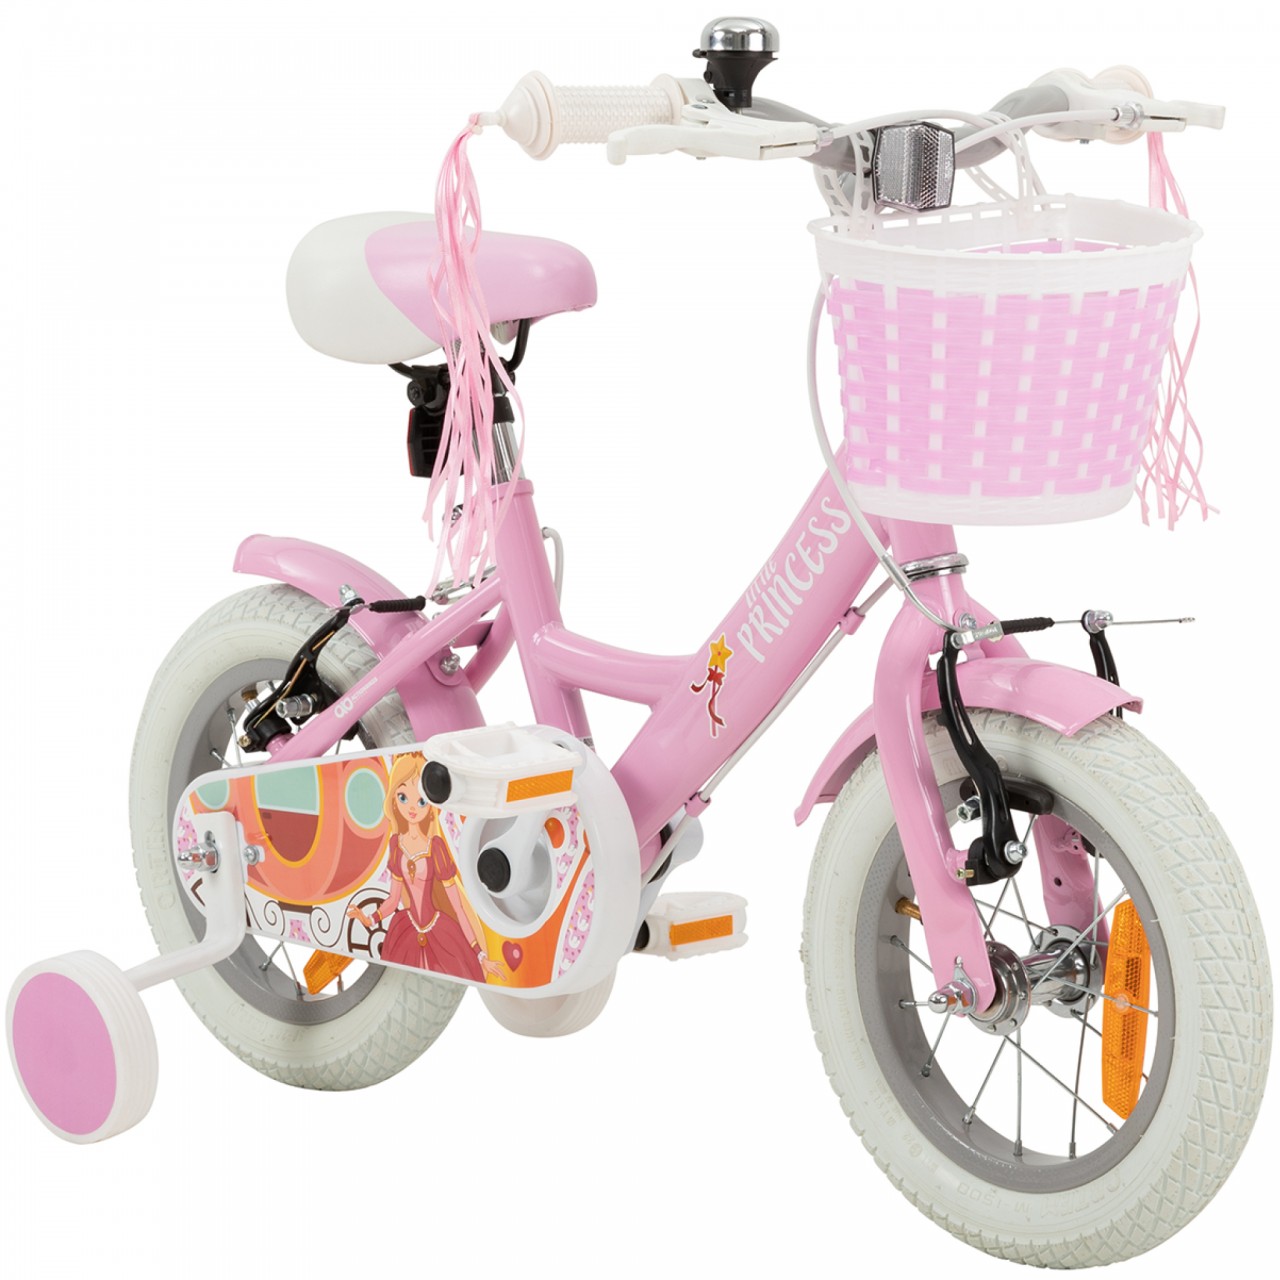 01-kinderfahrrad-12-zoll-rosa-actionbikes-motors-princess-startbild